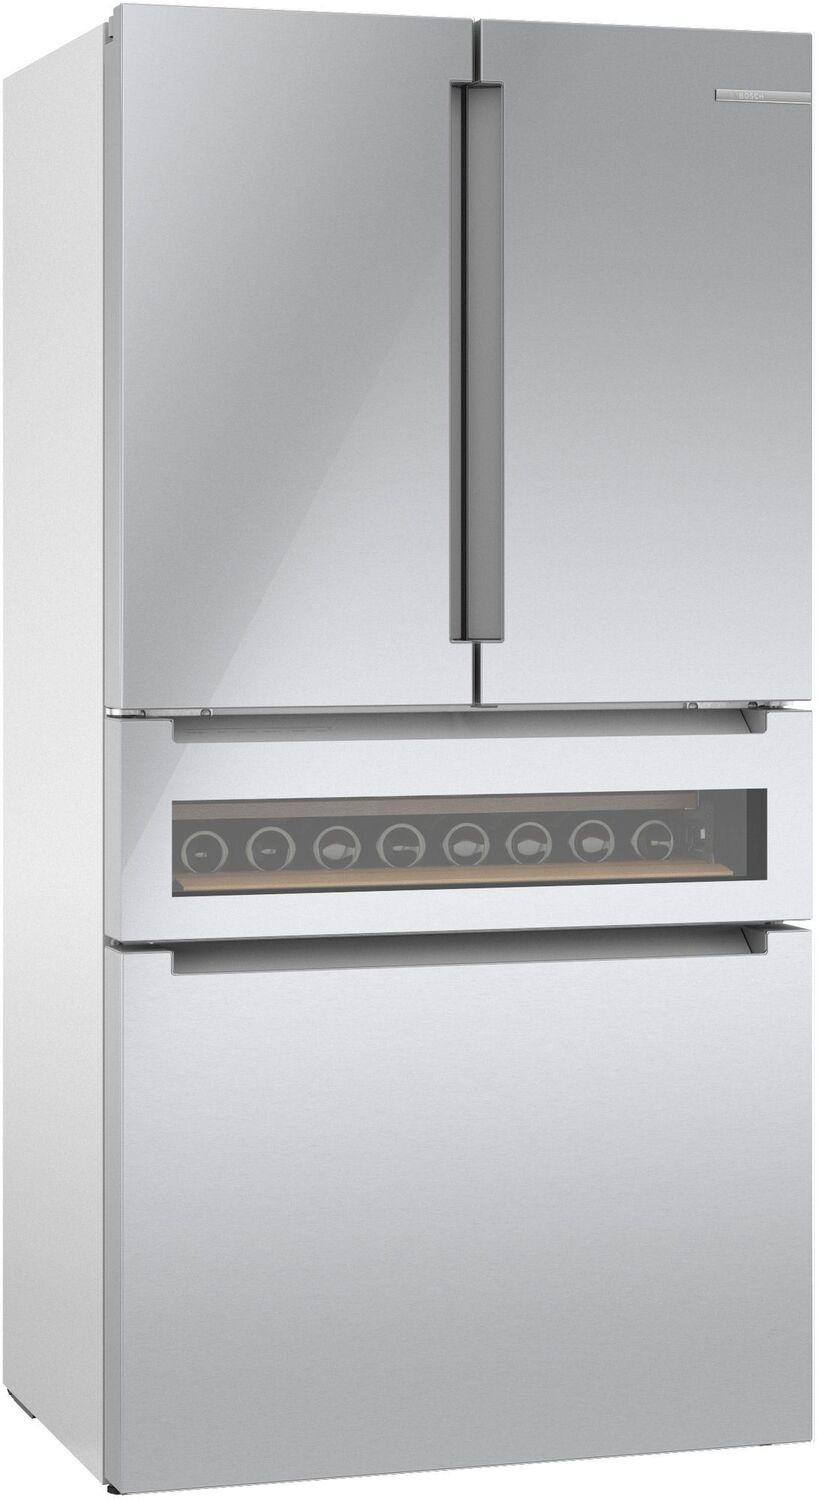 Bosch 800 Series French Door Bottom Mount Refrigerator, Glass door 36" Stainless Steel B36CL81ENG